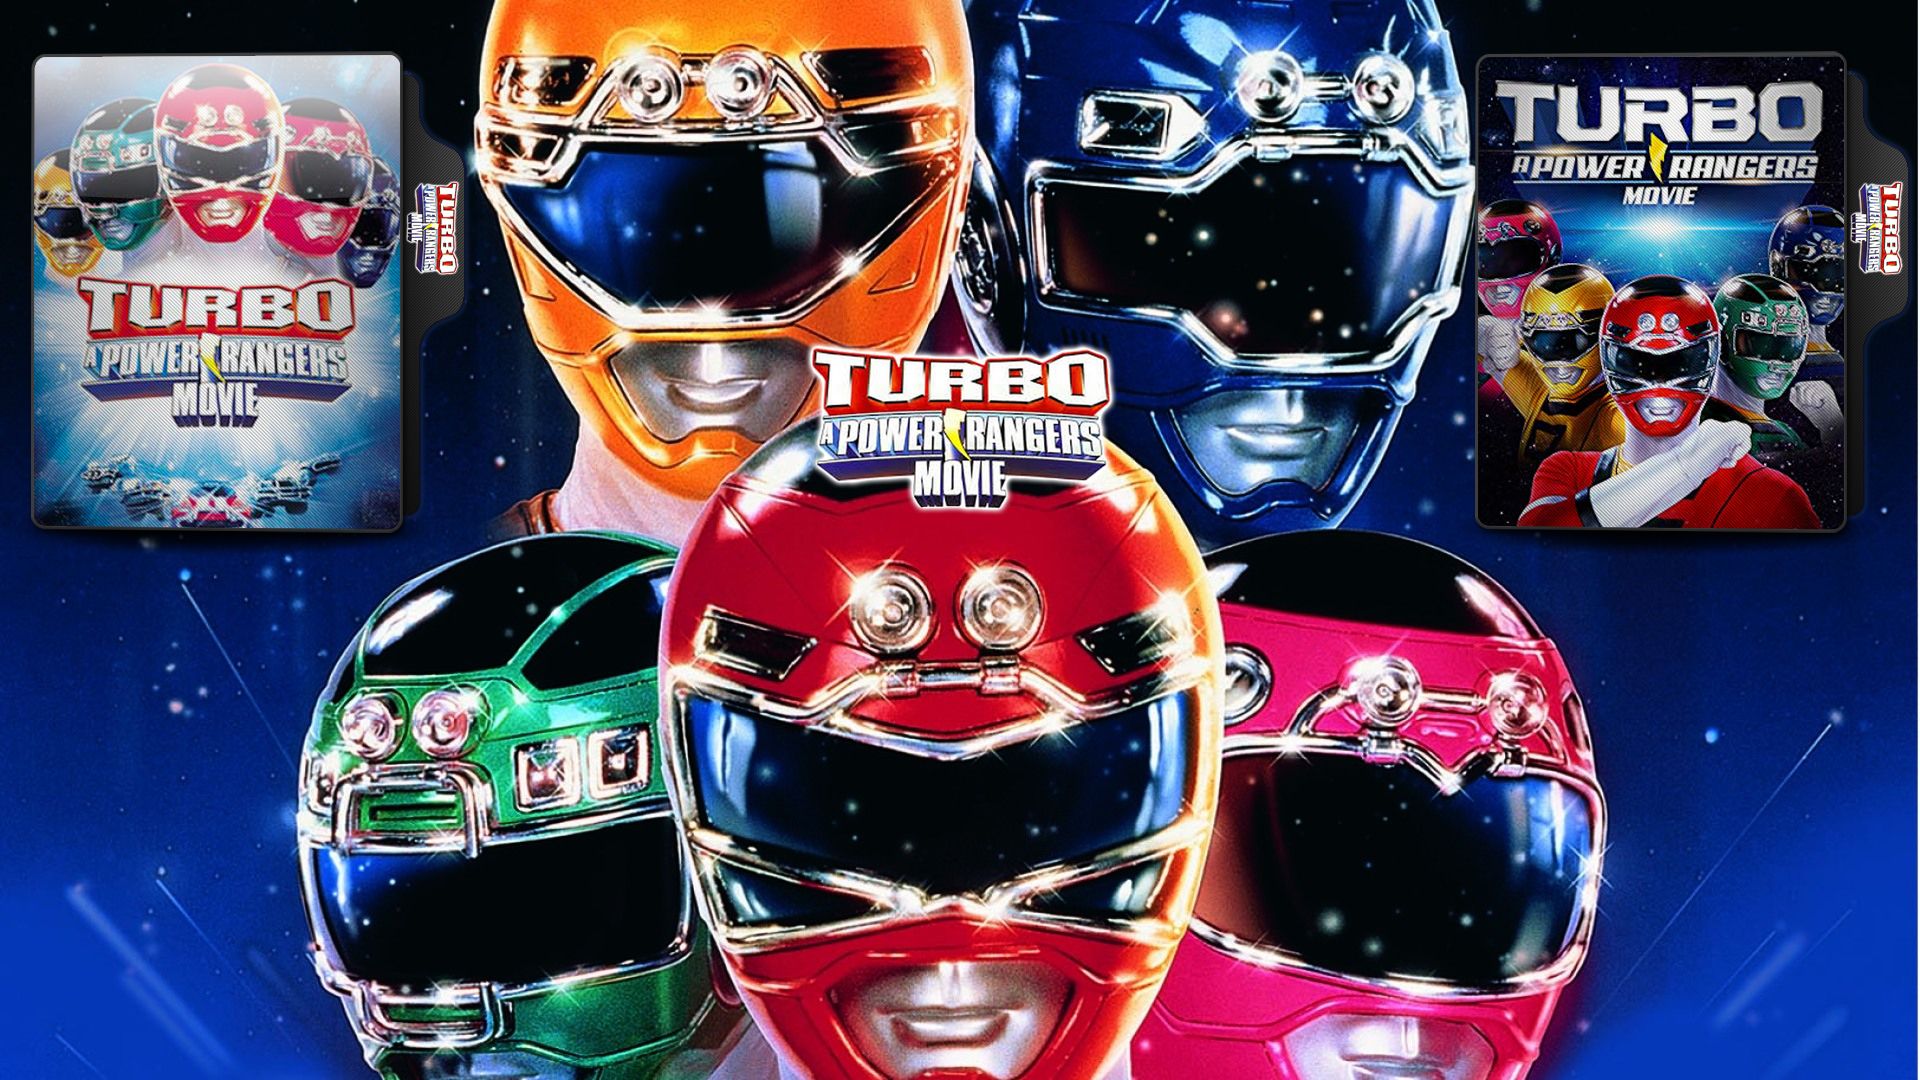 Turbo A Power Rangers Movie Folder Icon